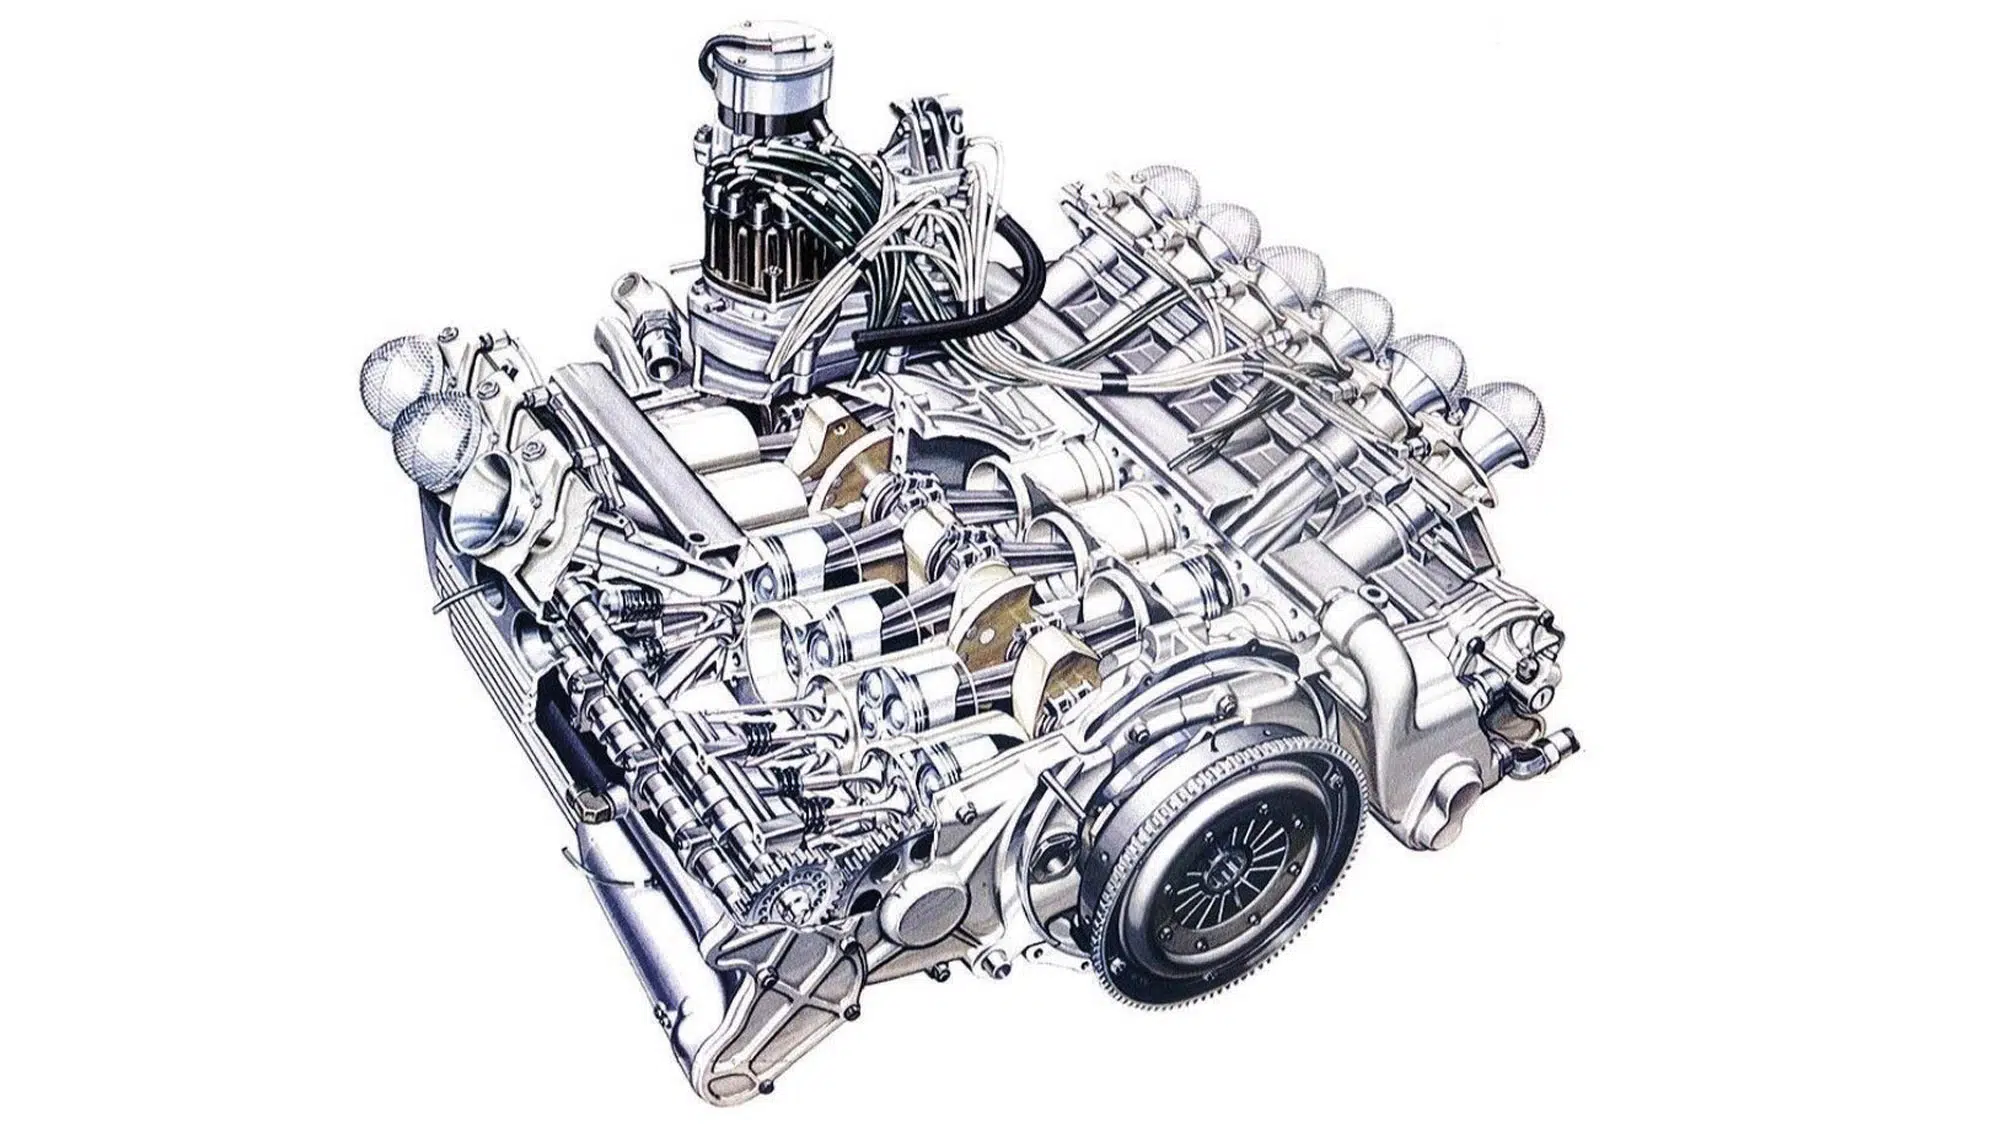 Ferrari flat 12 engine illustration